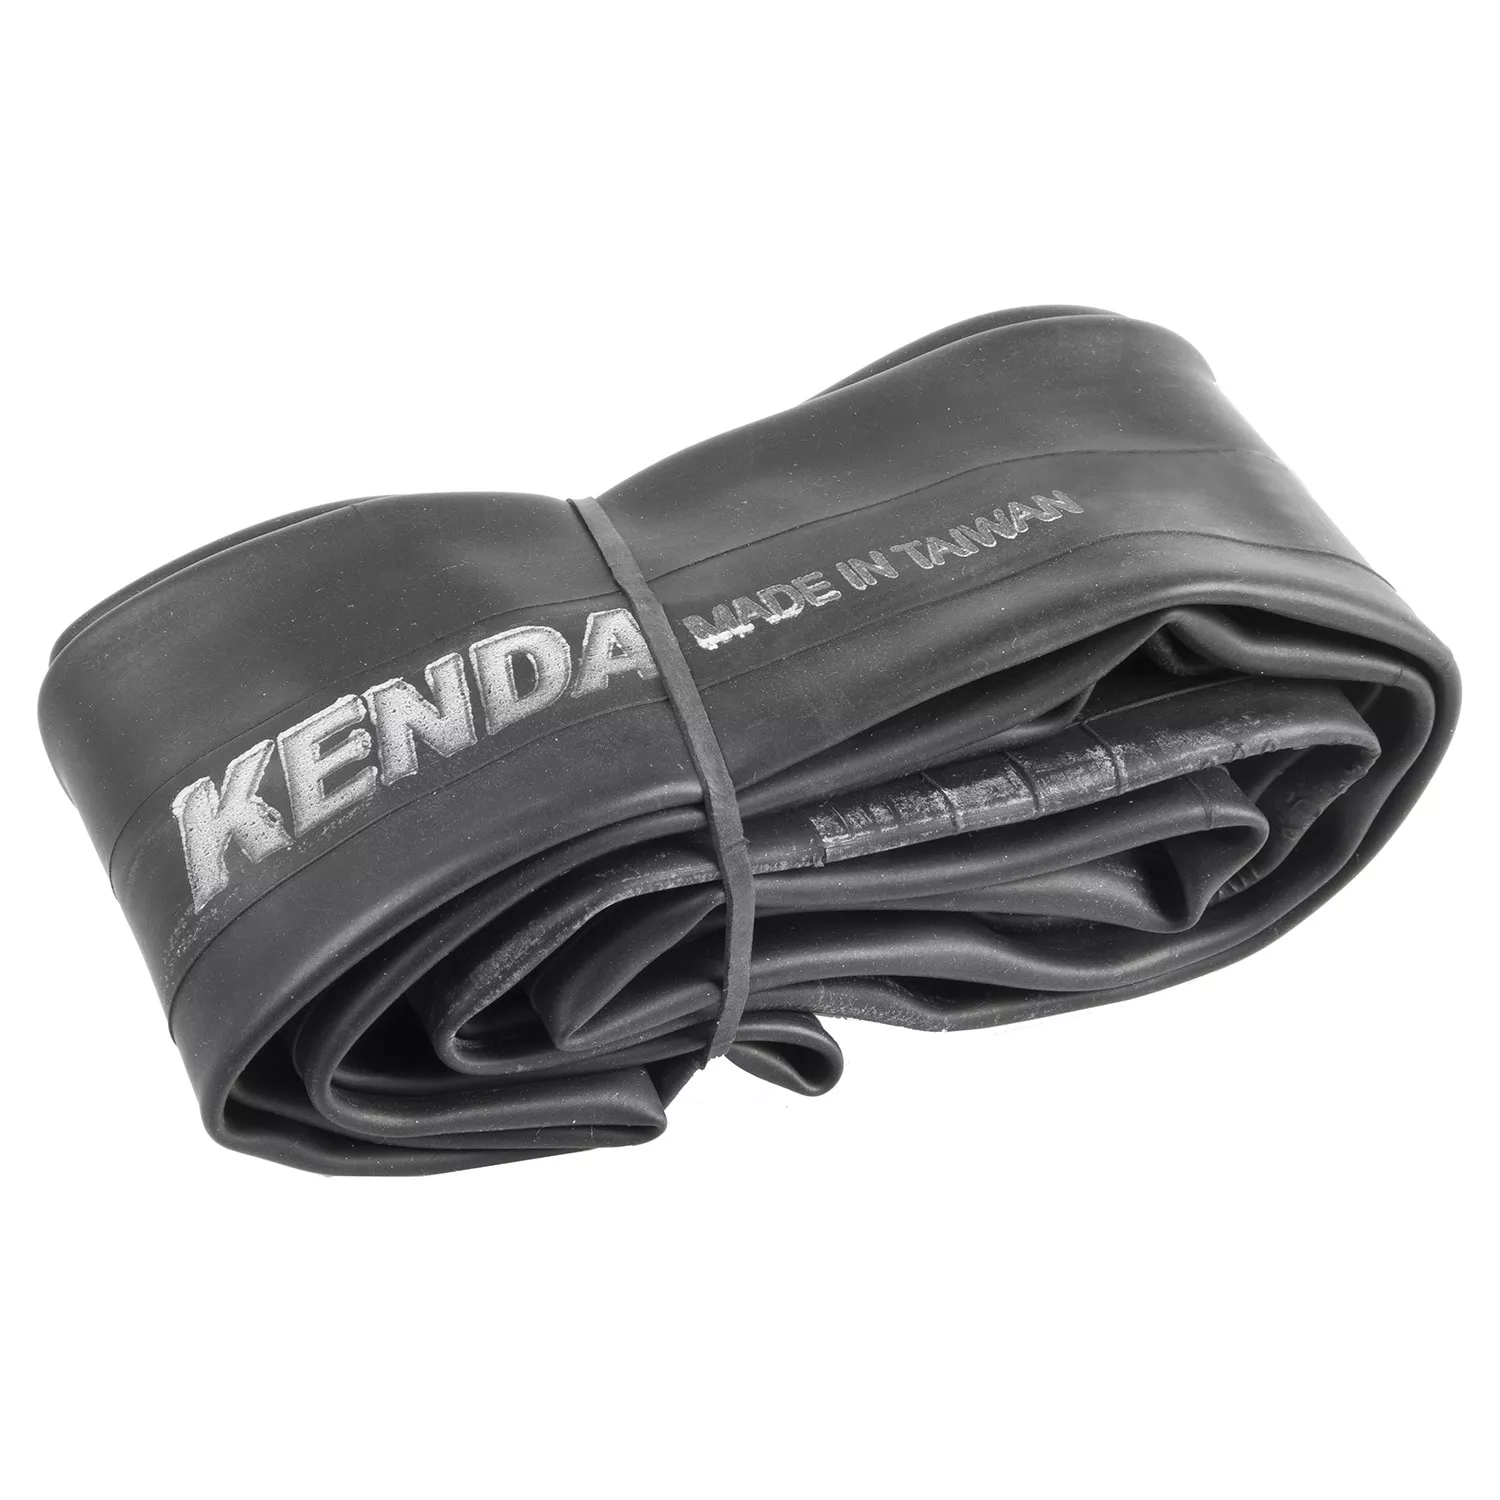 KENDA Ultralite bicycle inner tube 28/29 inch x 1.9 -2.35 inch FV